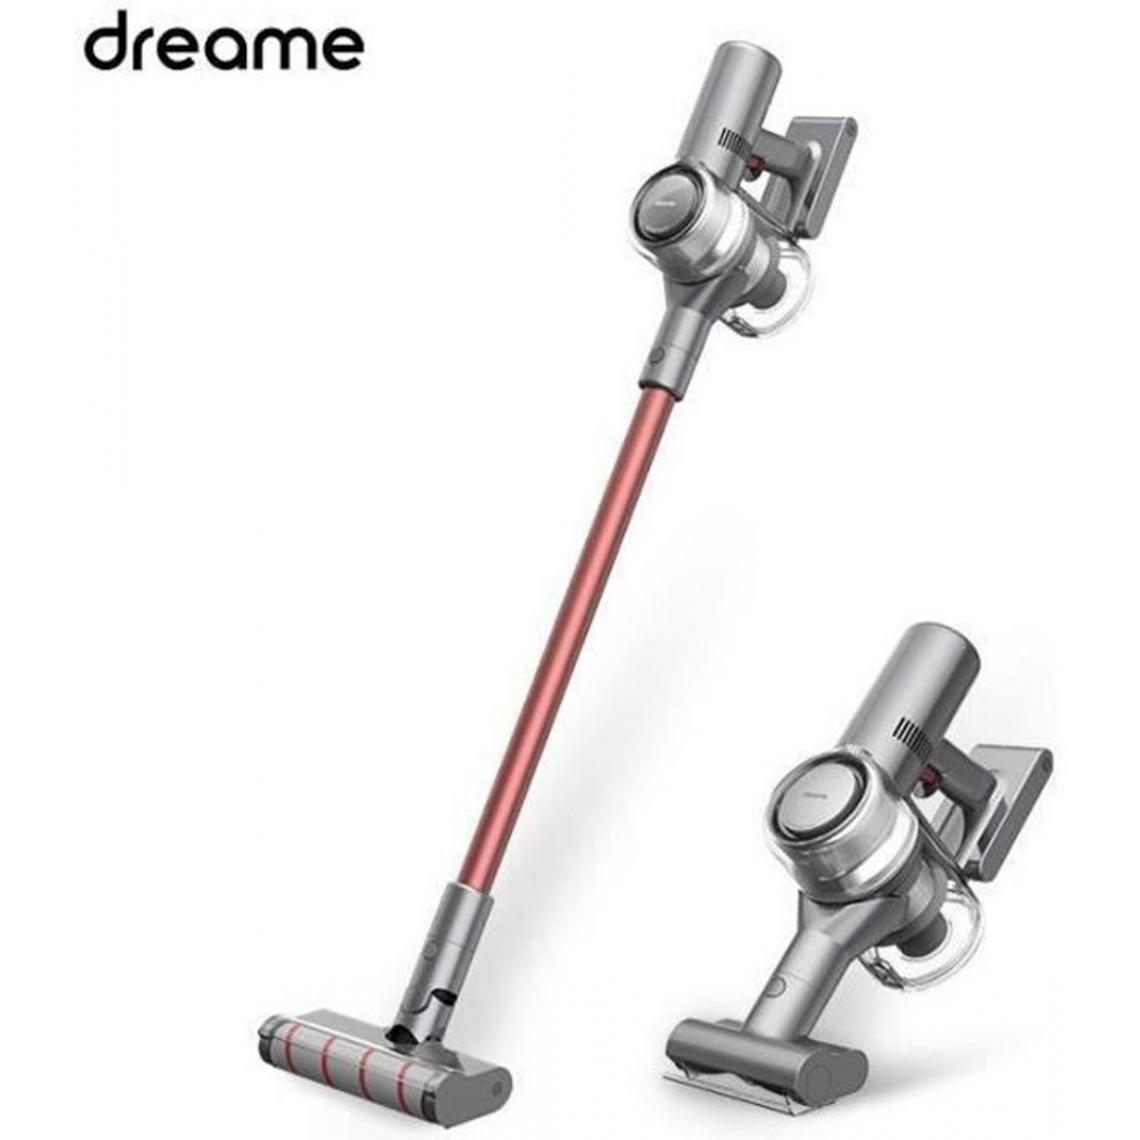 DREAME - Aspirateur balai Dreame V11 - Aspirateur balai